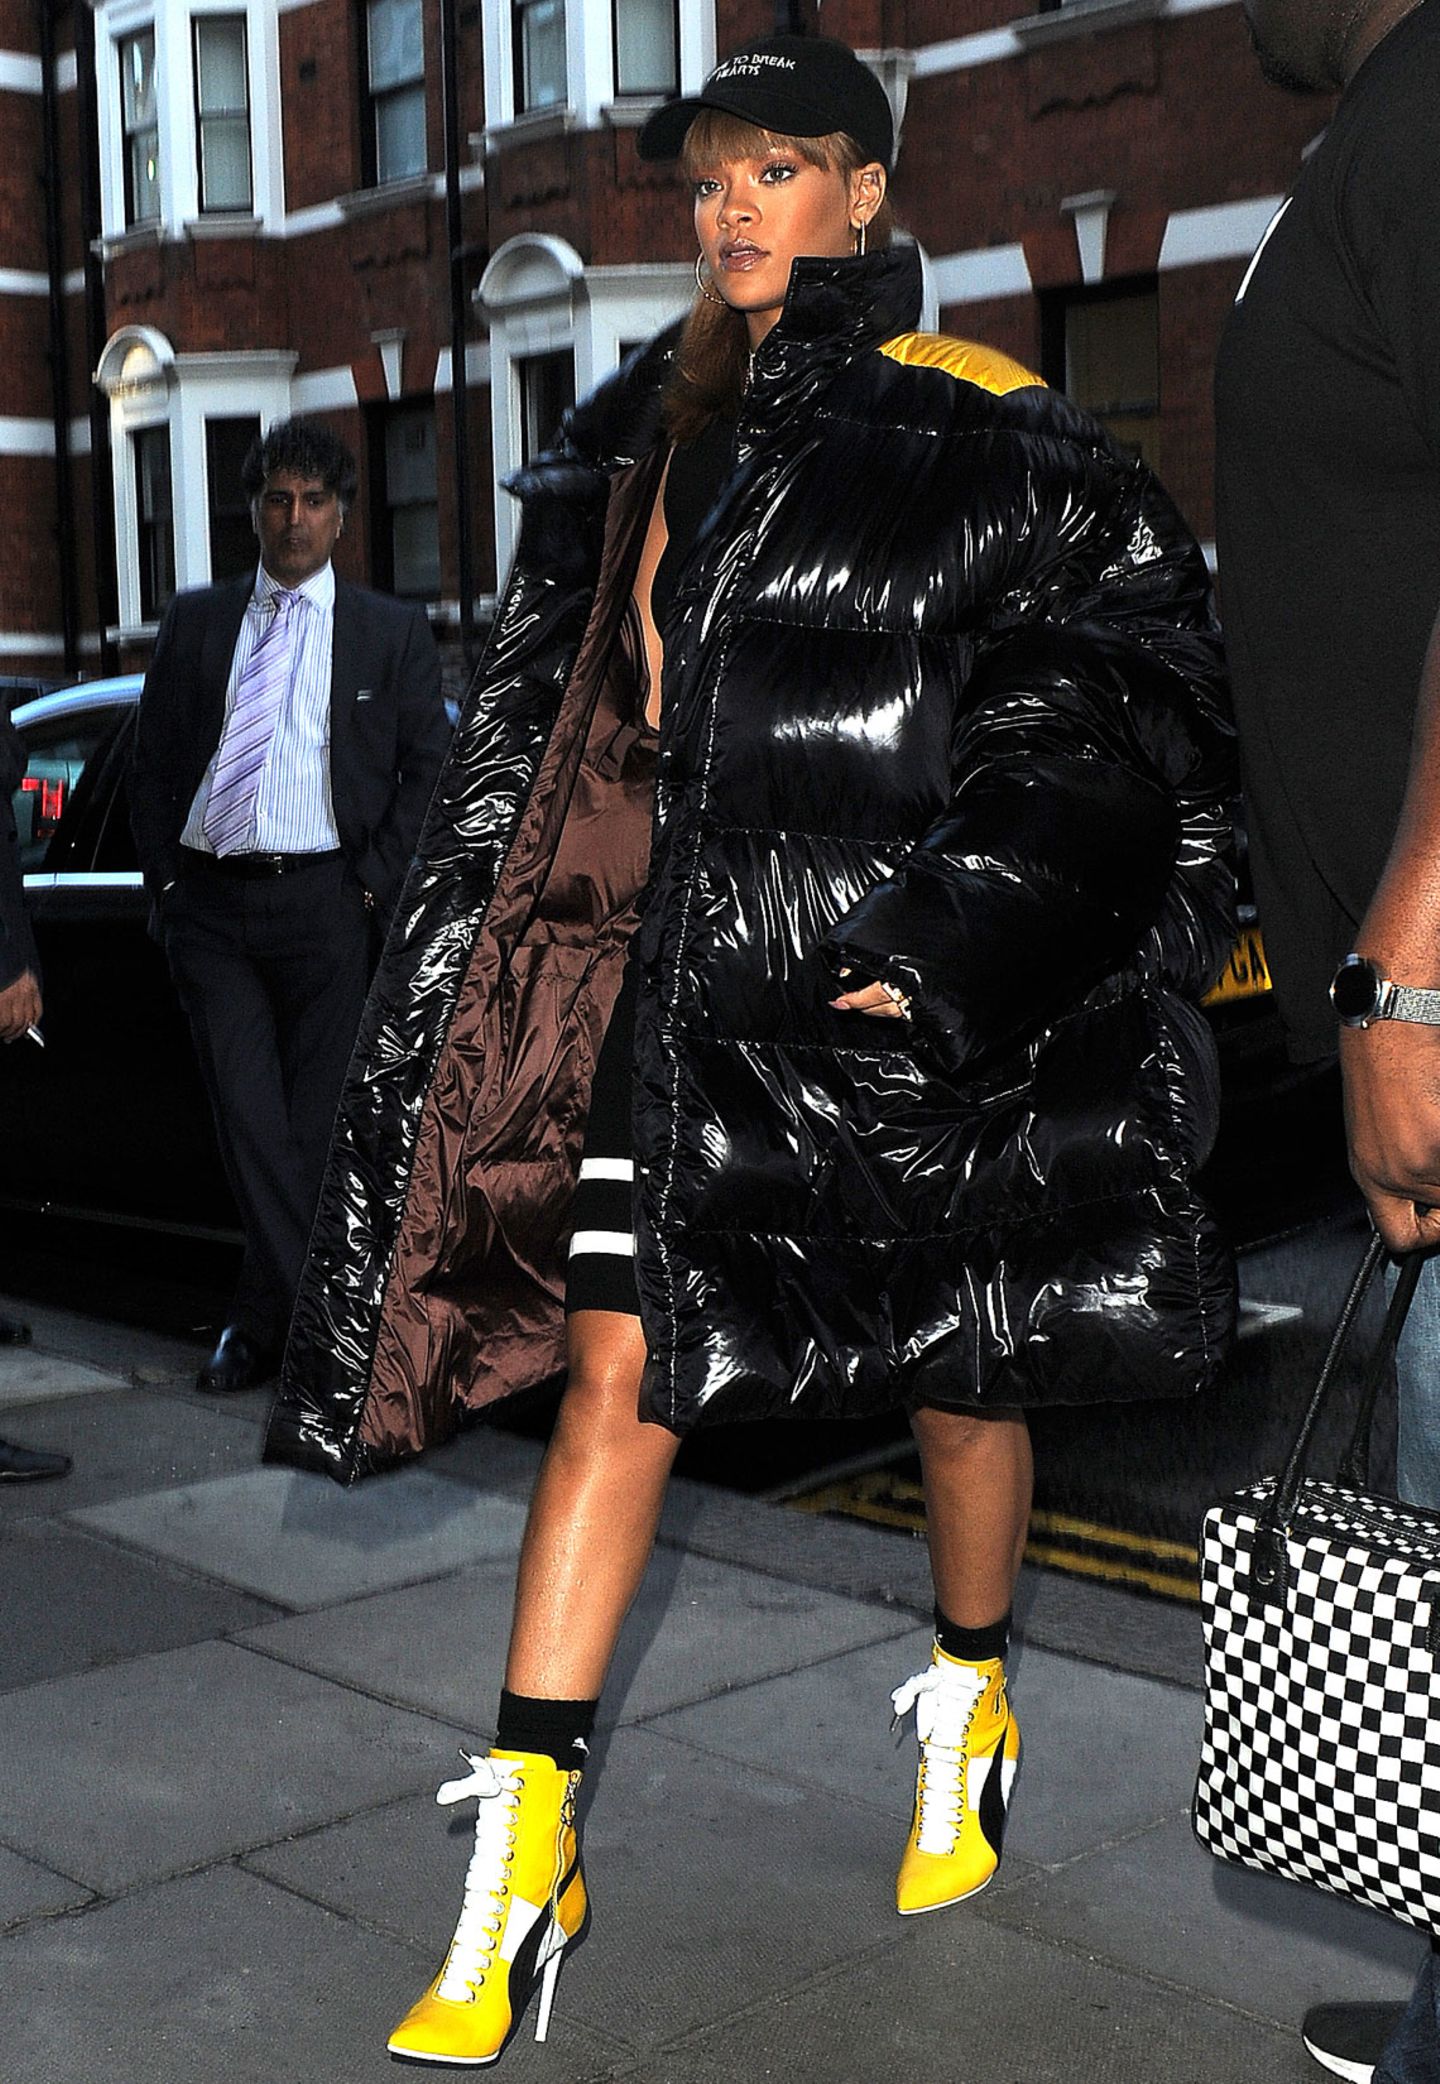 Mit diesen Knaller-Booties startet Rihanna ihren Shoppingbummel bei "Harrods" in London.